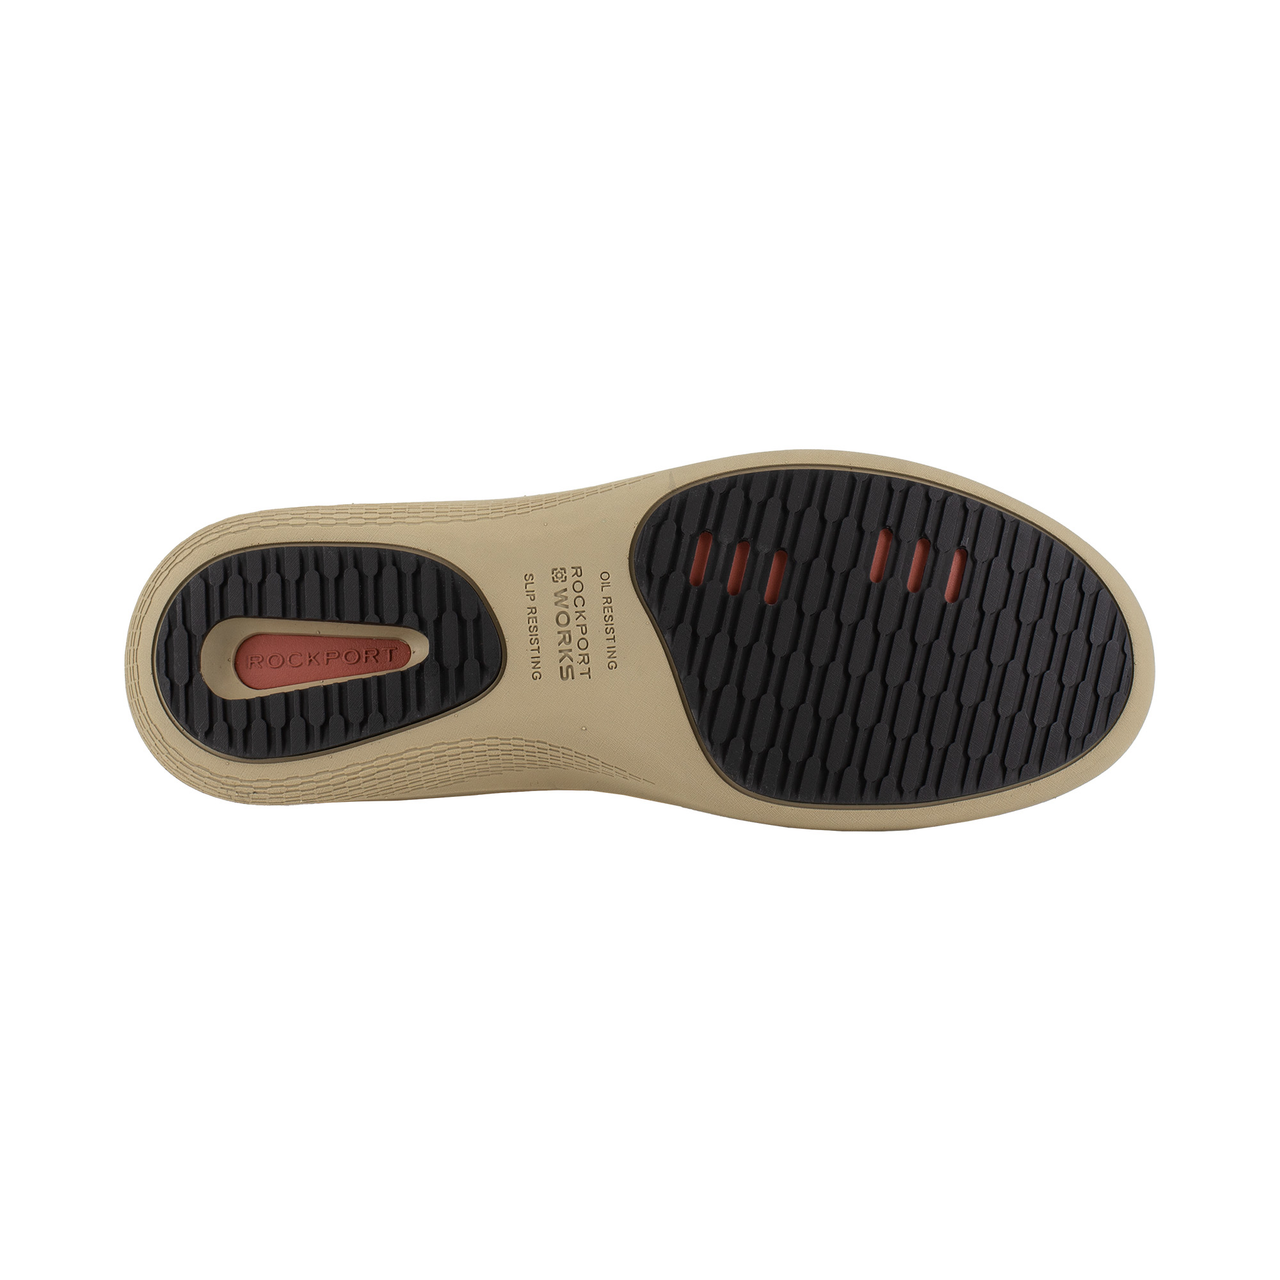 Rockport truFLEX Work - RK4690 - Men's Composite Toe Shoes